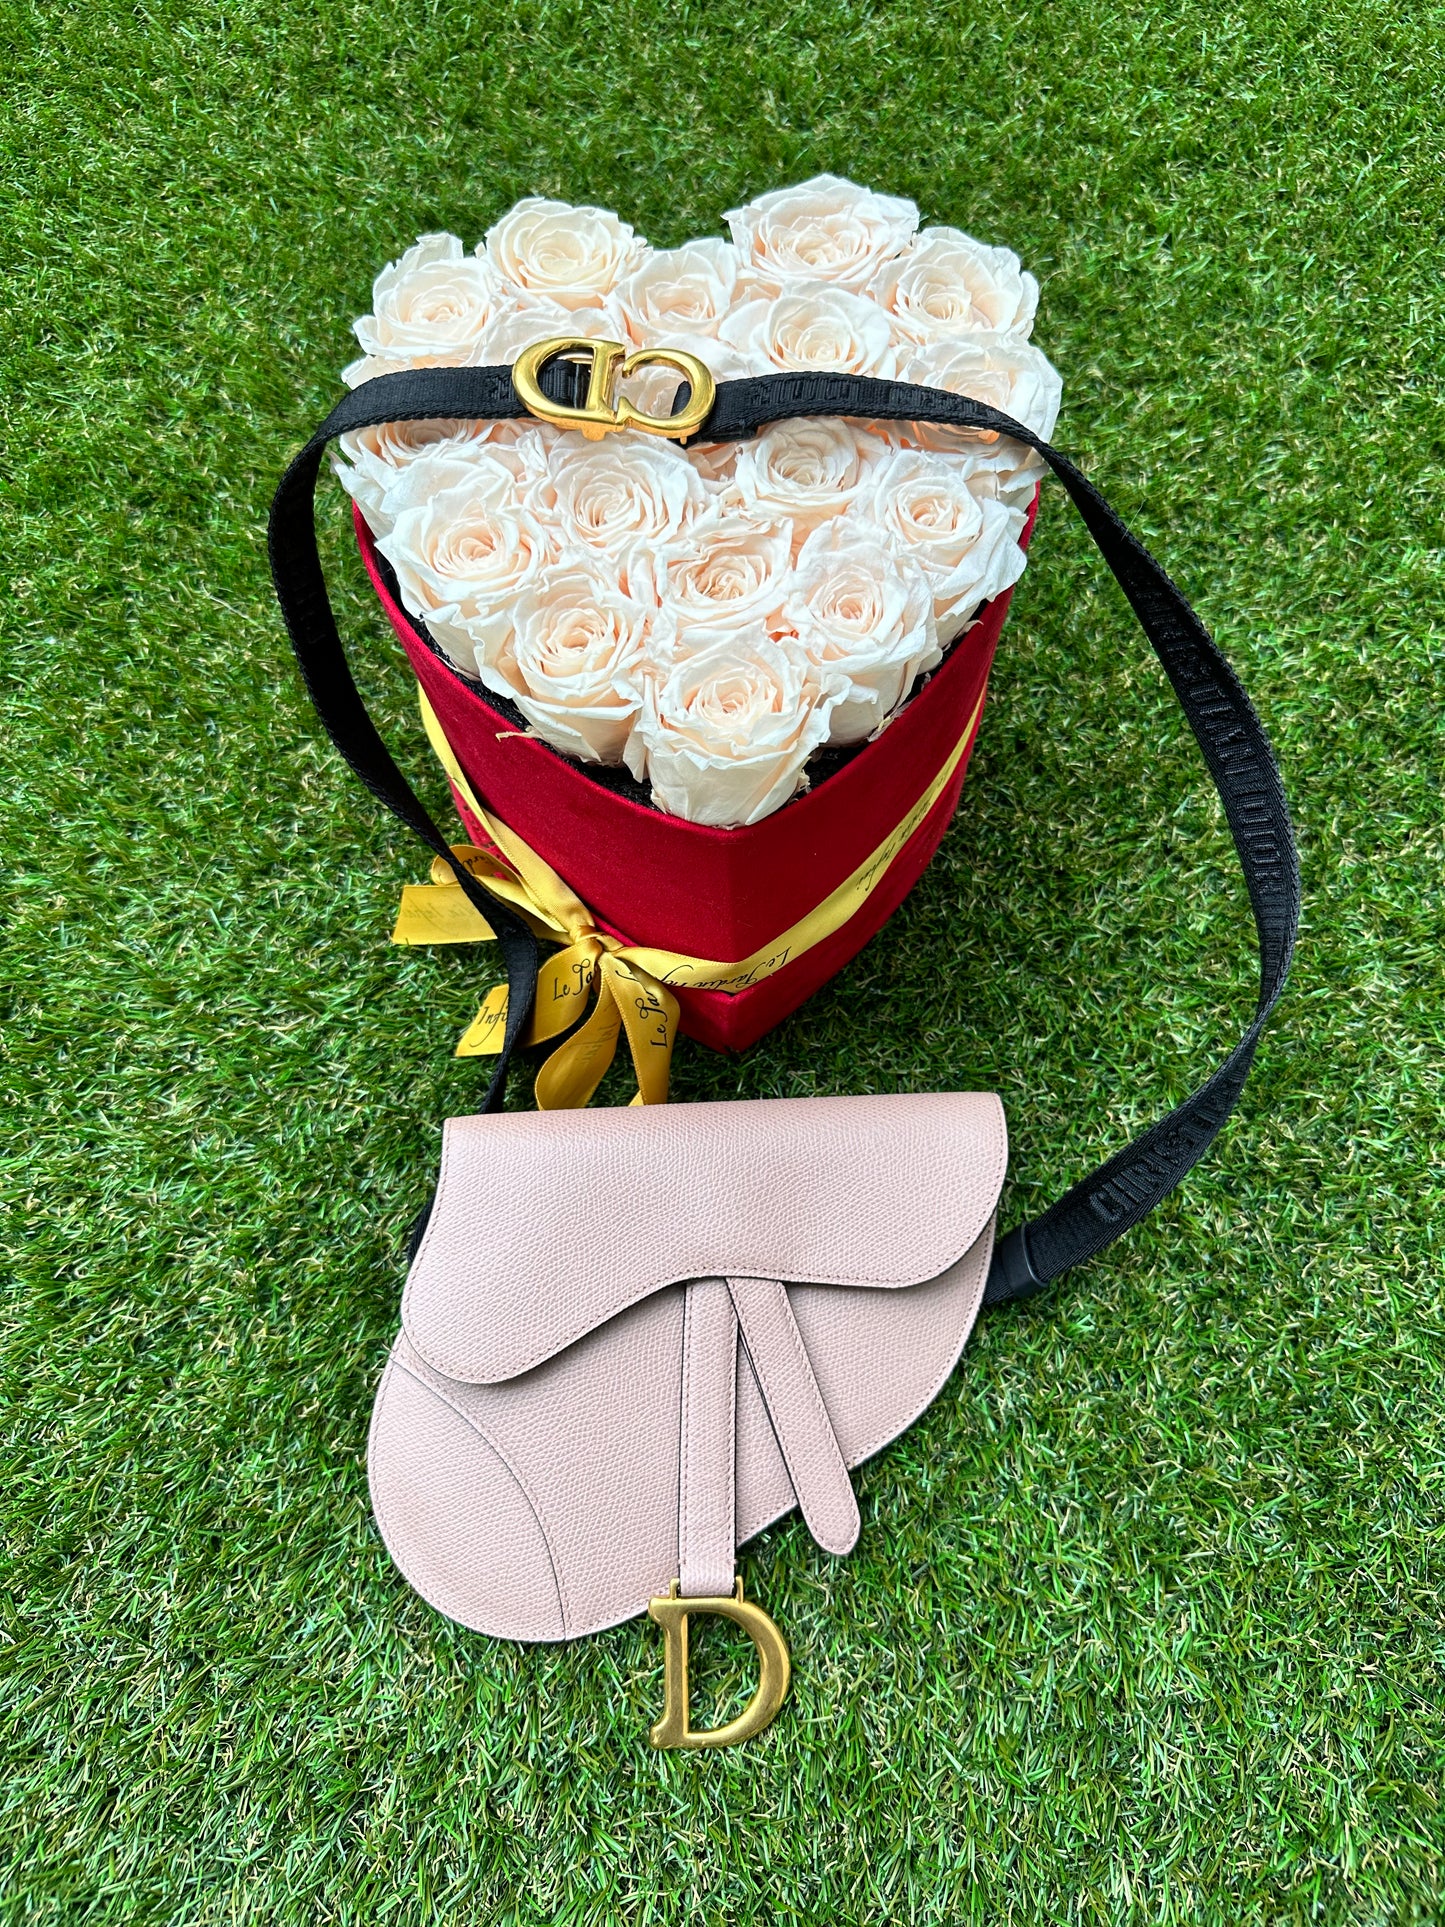 Dior Saddle Belt Pouch Waist Blush Beige Poudre Pink Belt Bag